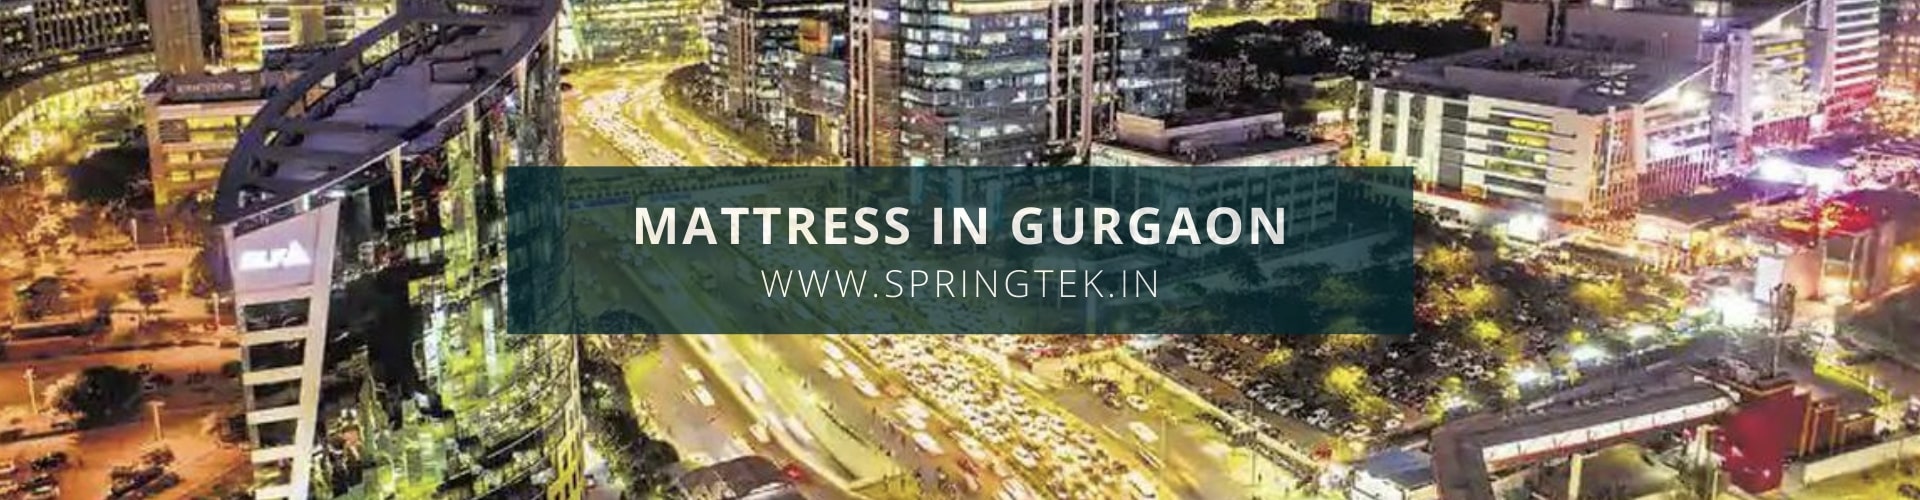 Buy mattresses online in gurgaon